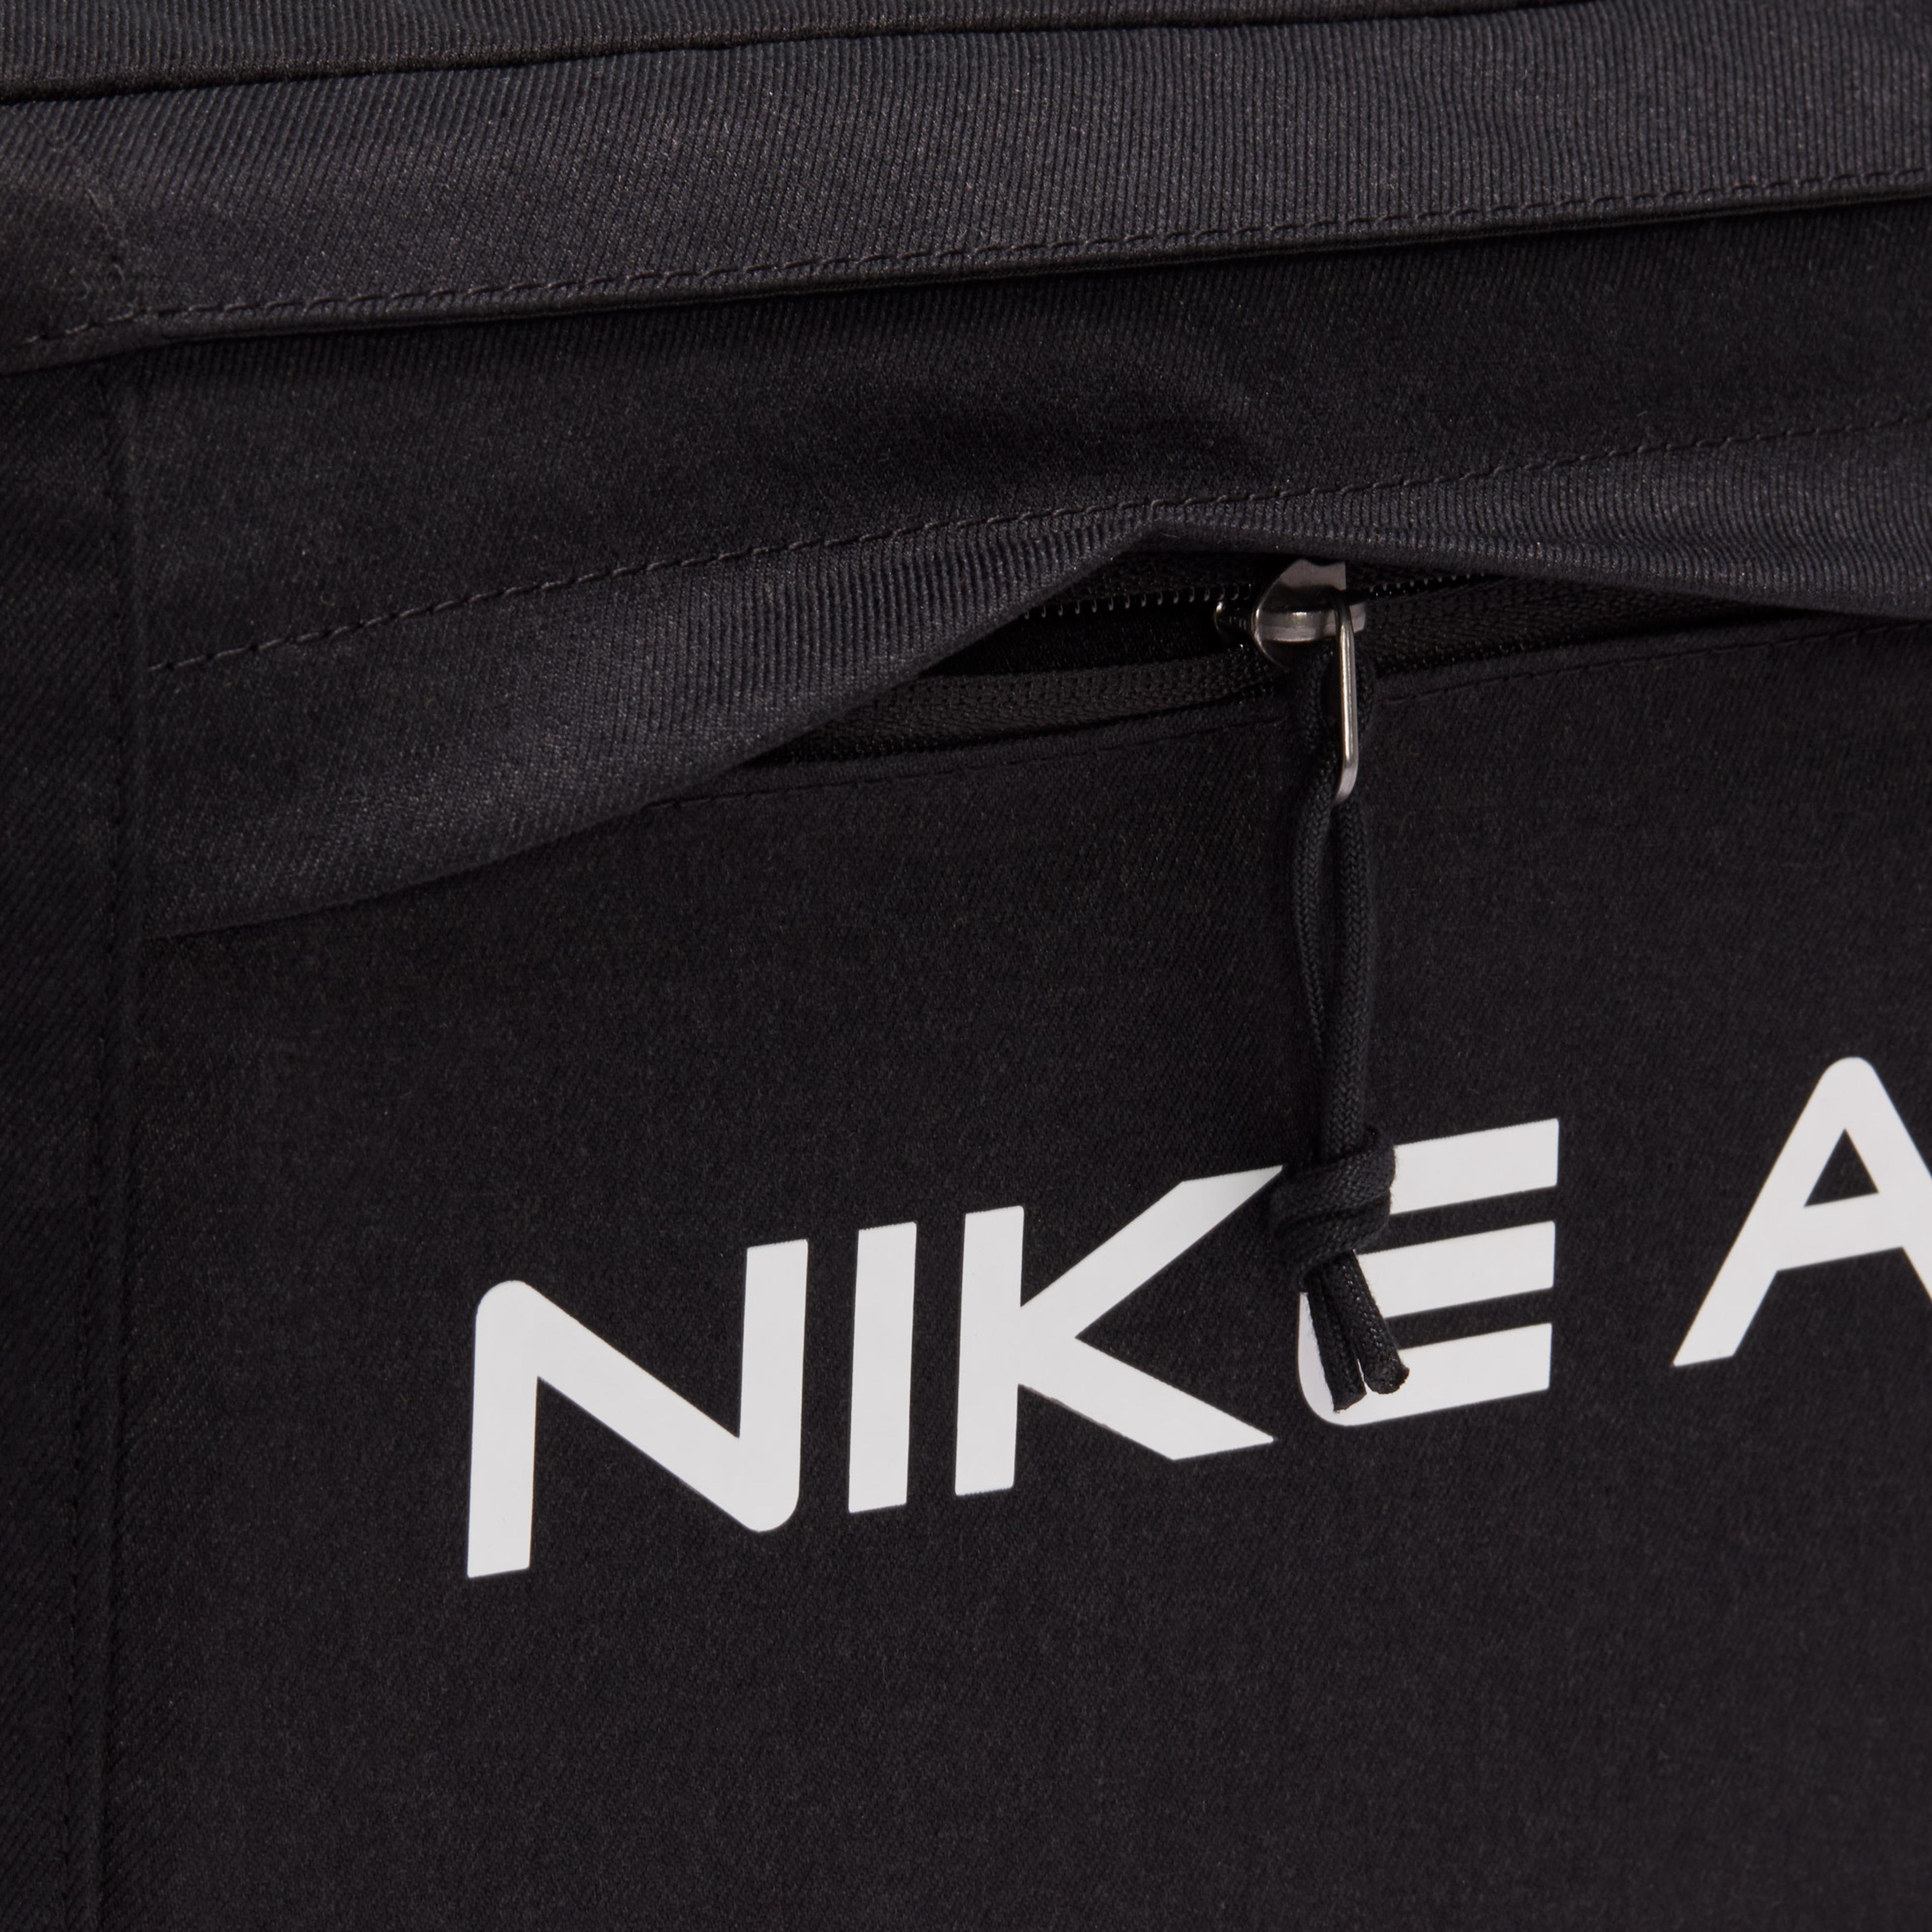 Nike Air Tech Unisex Siyah Bel Çantası